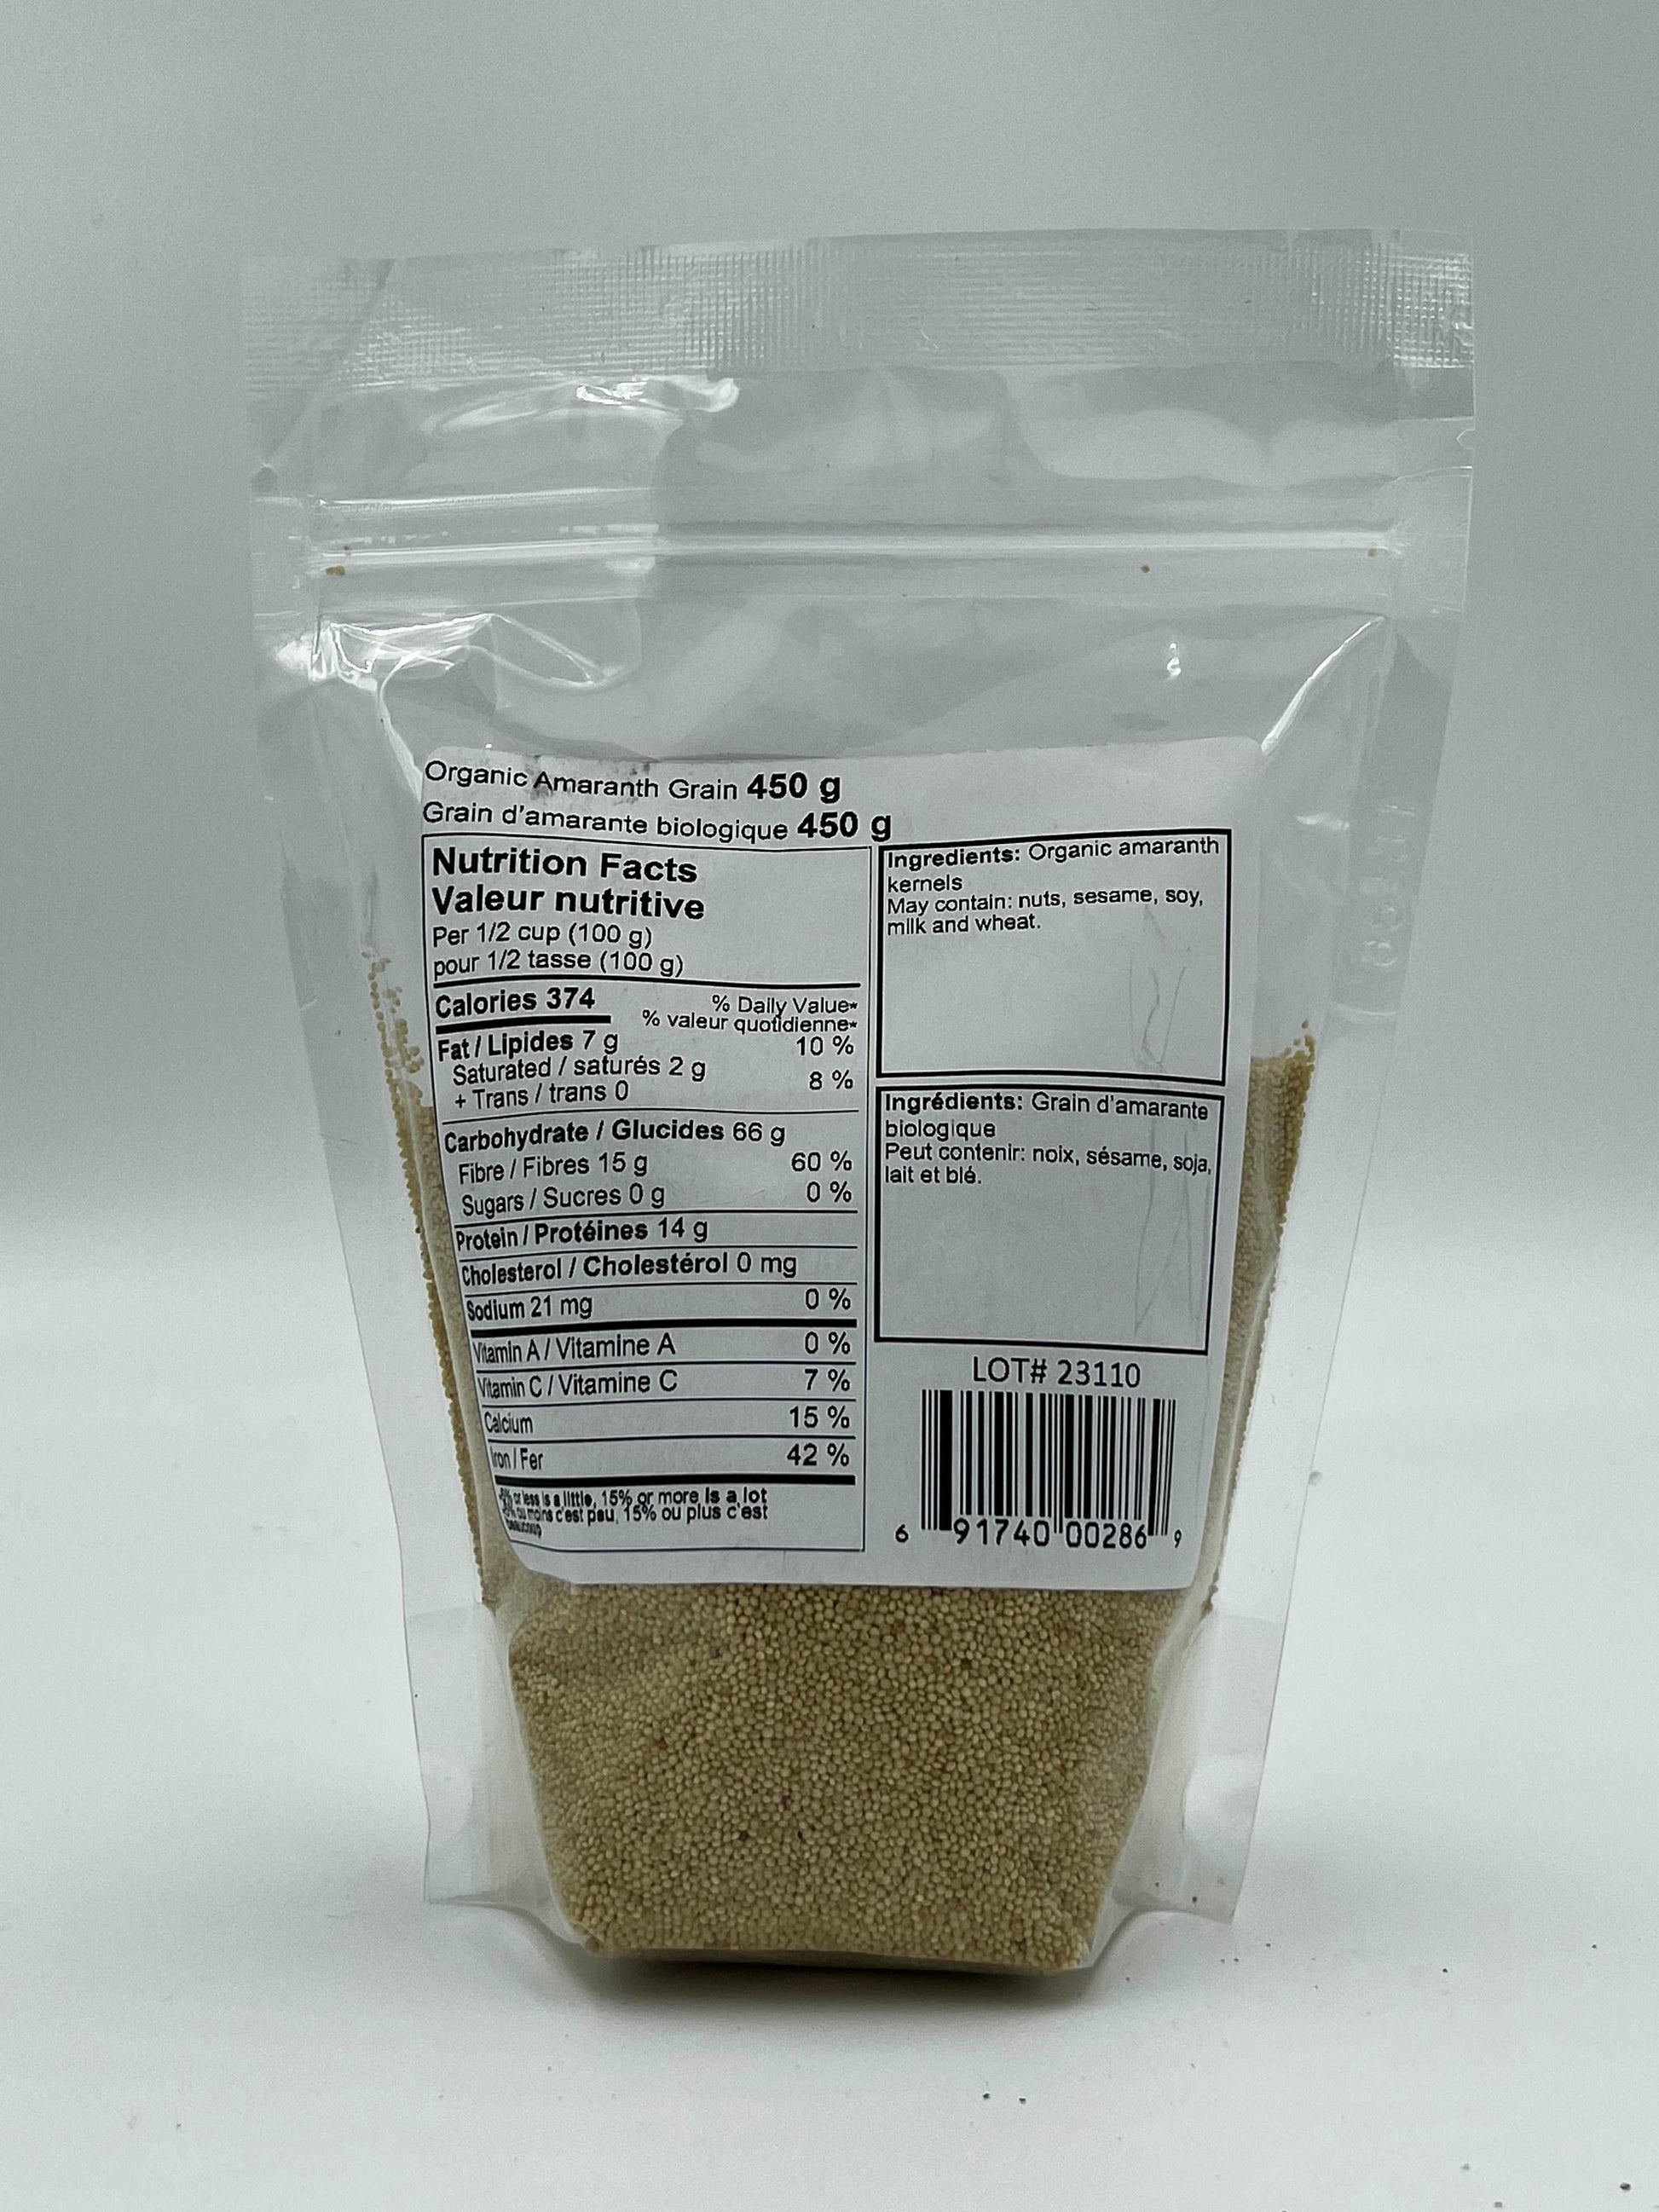 1003. Organic Amaranth Grain